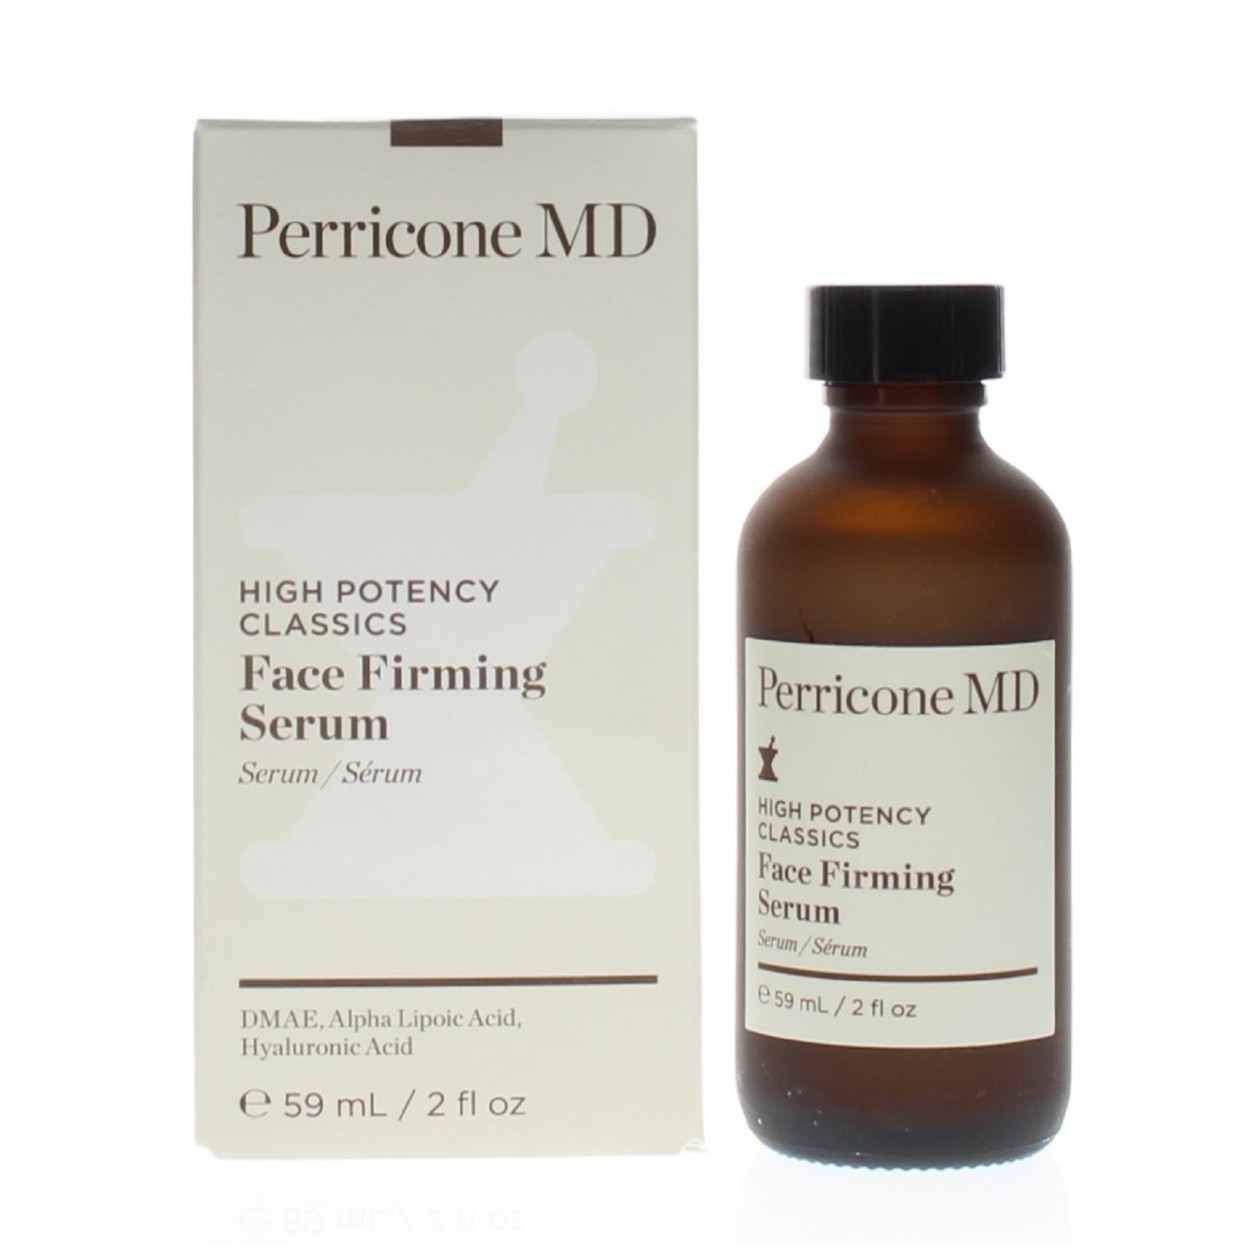 Perricone MD High Potency Classics Face Firming Serum 2oz/59ml